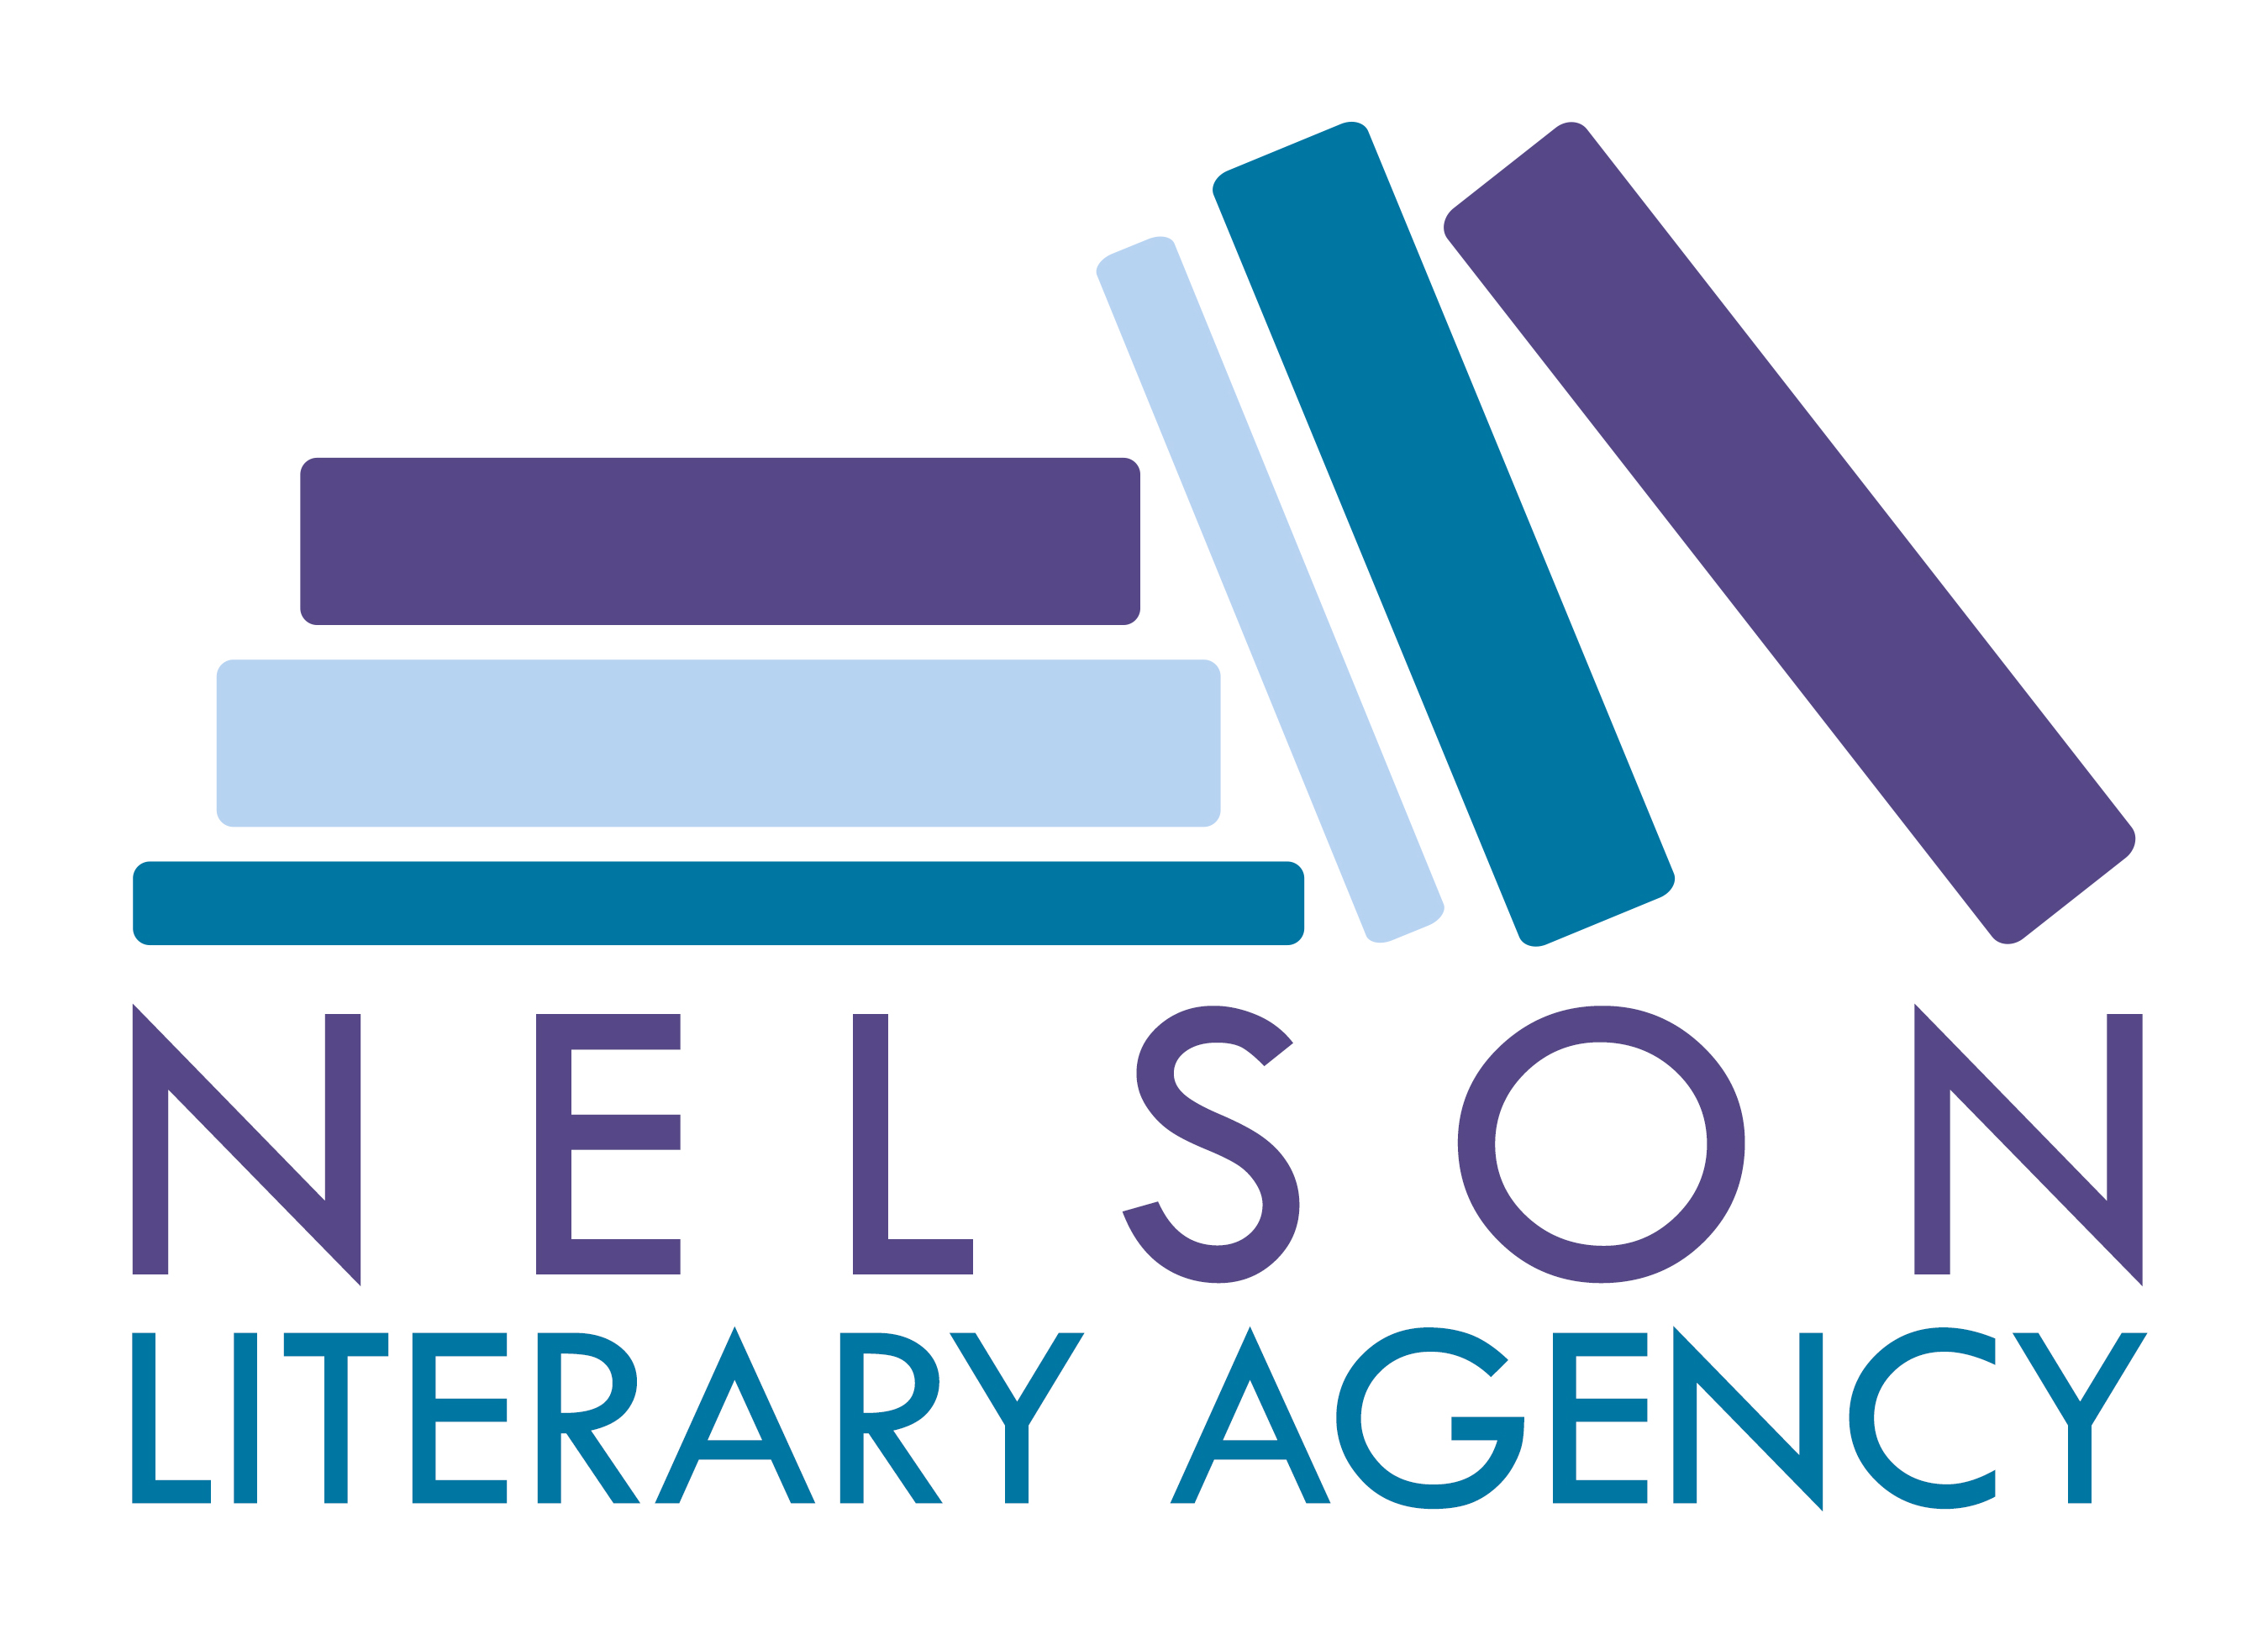 Nelson Literary Agency